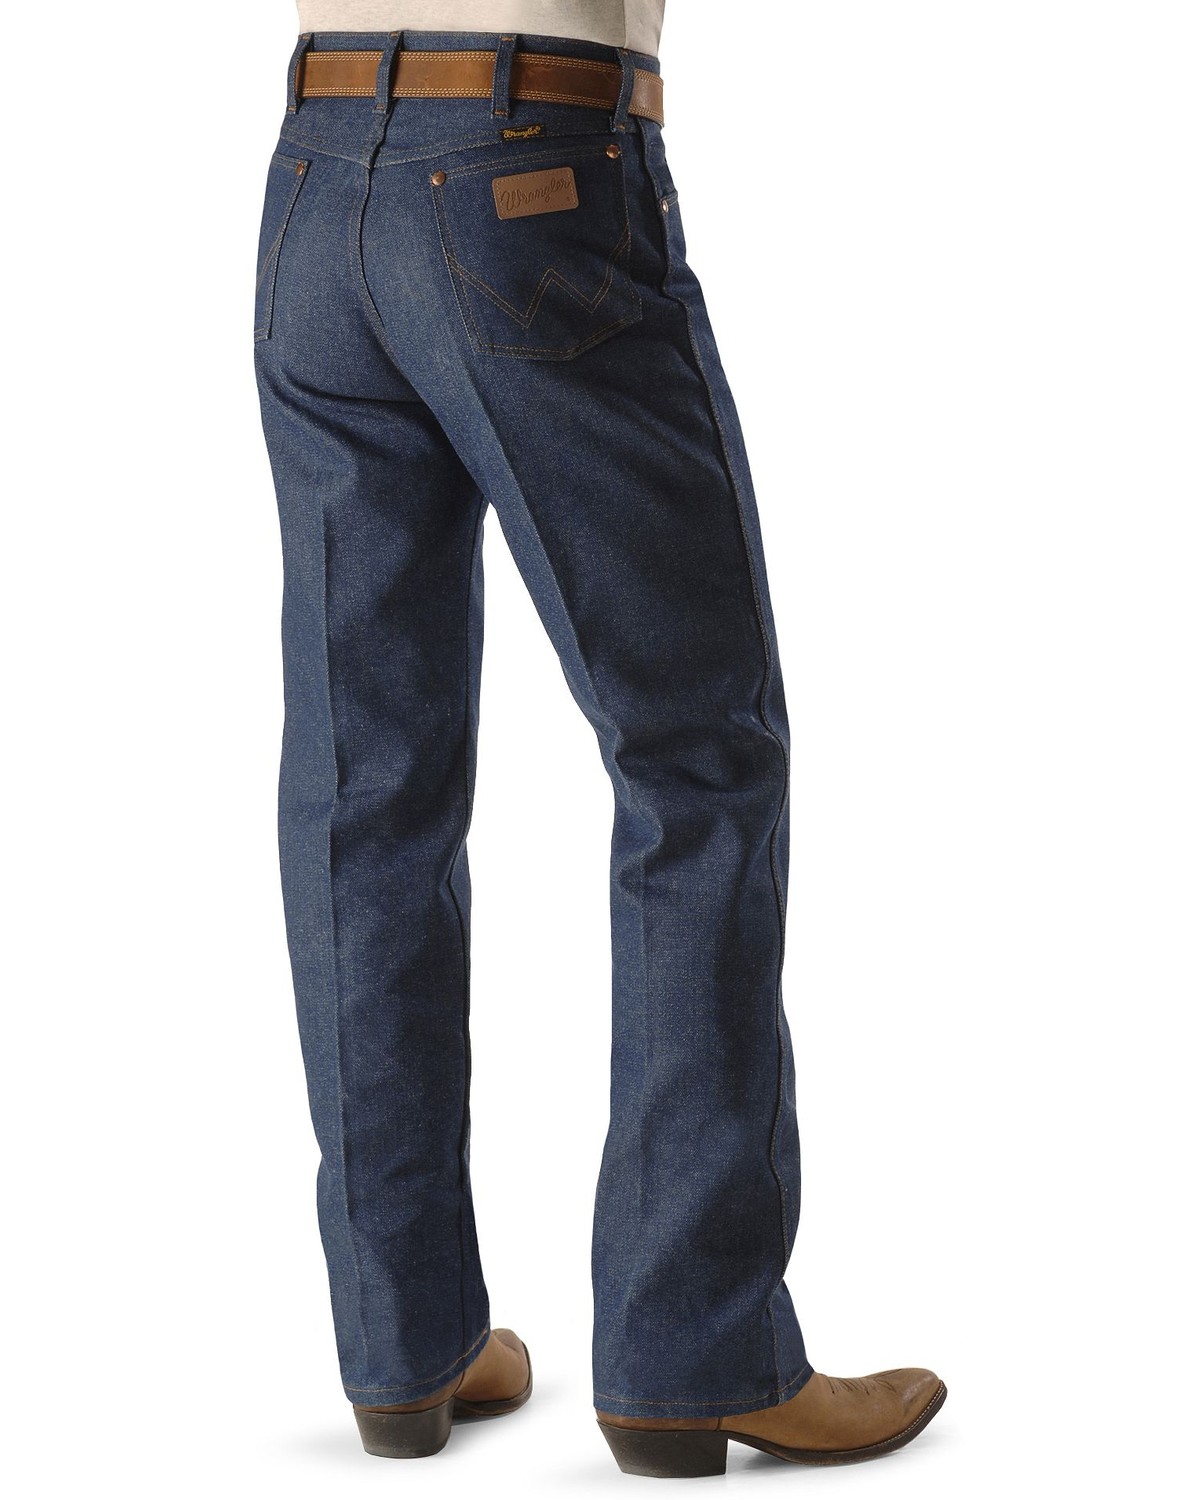 Wrangler Cowboy Cut Original Fit Jeans 13MWZ Men's 